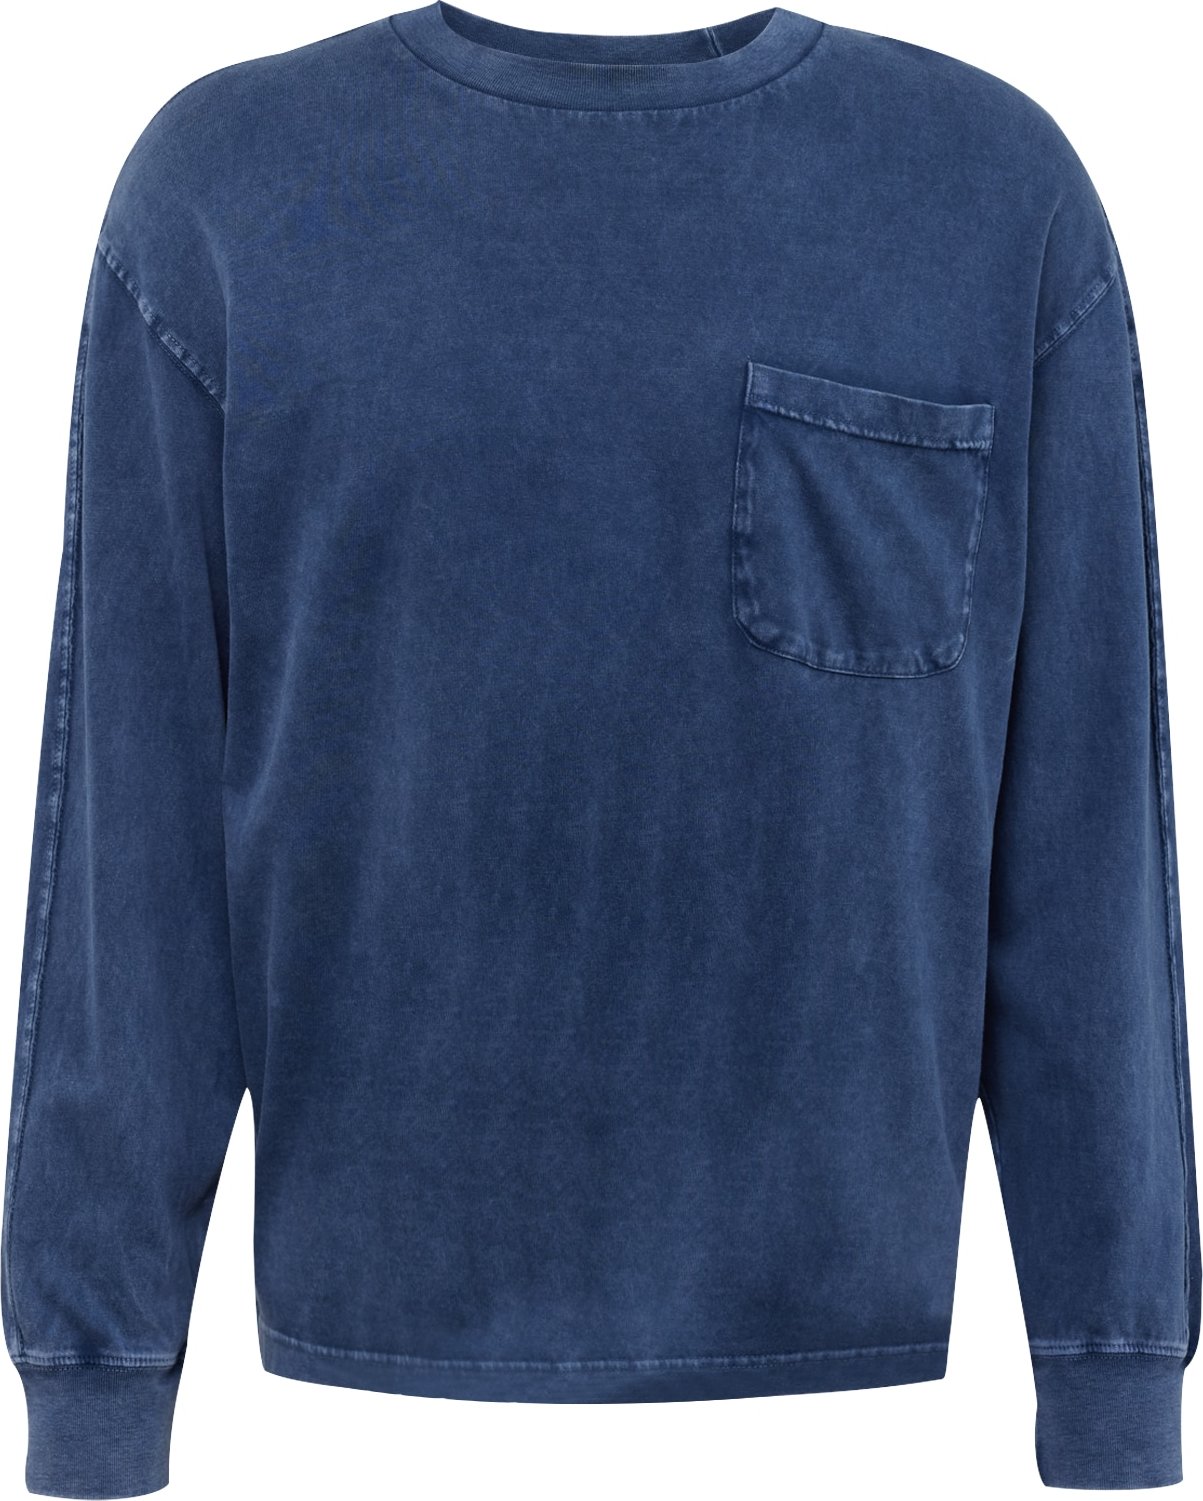 Tričko Abercrombie & Fitch tmavě modrá